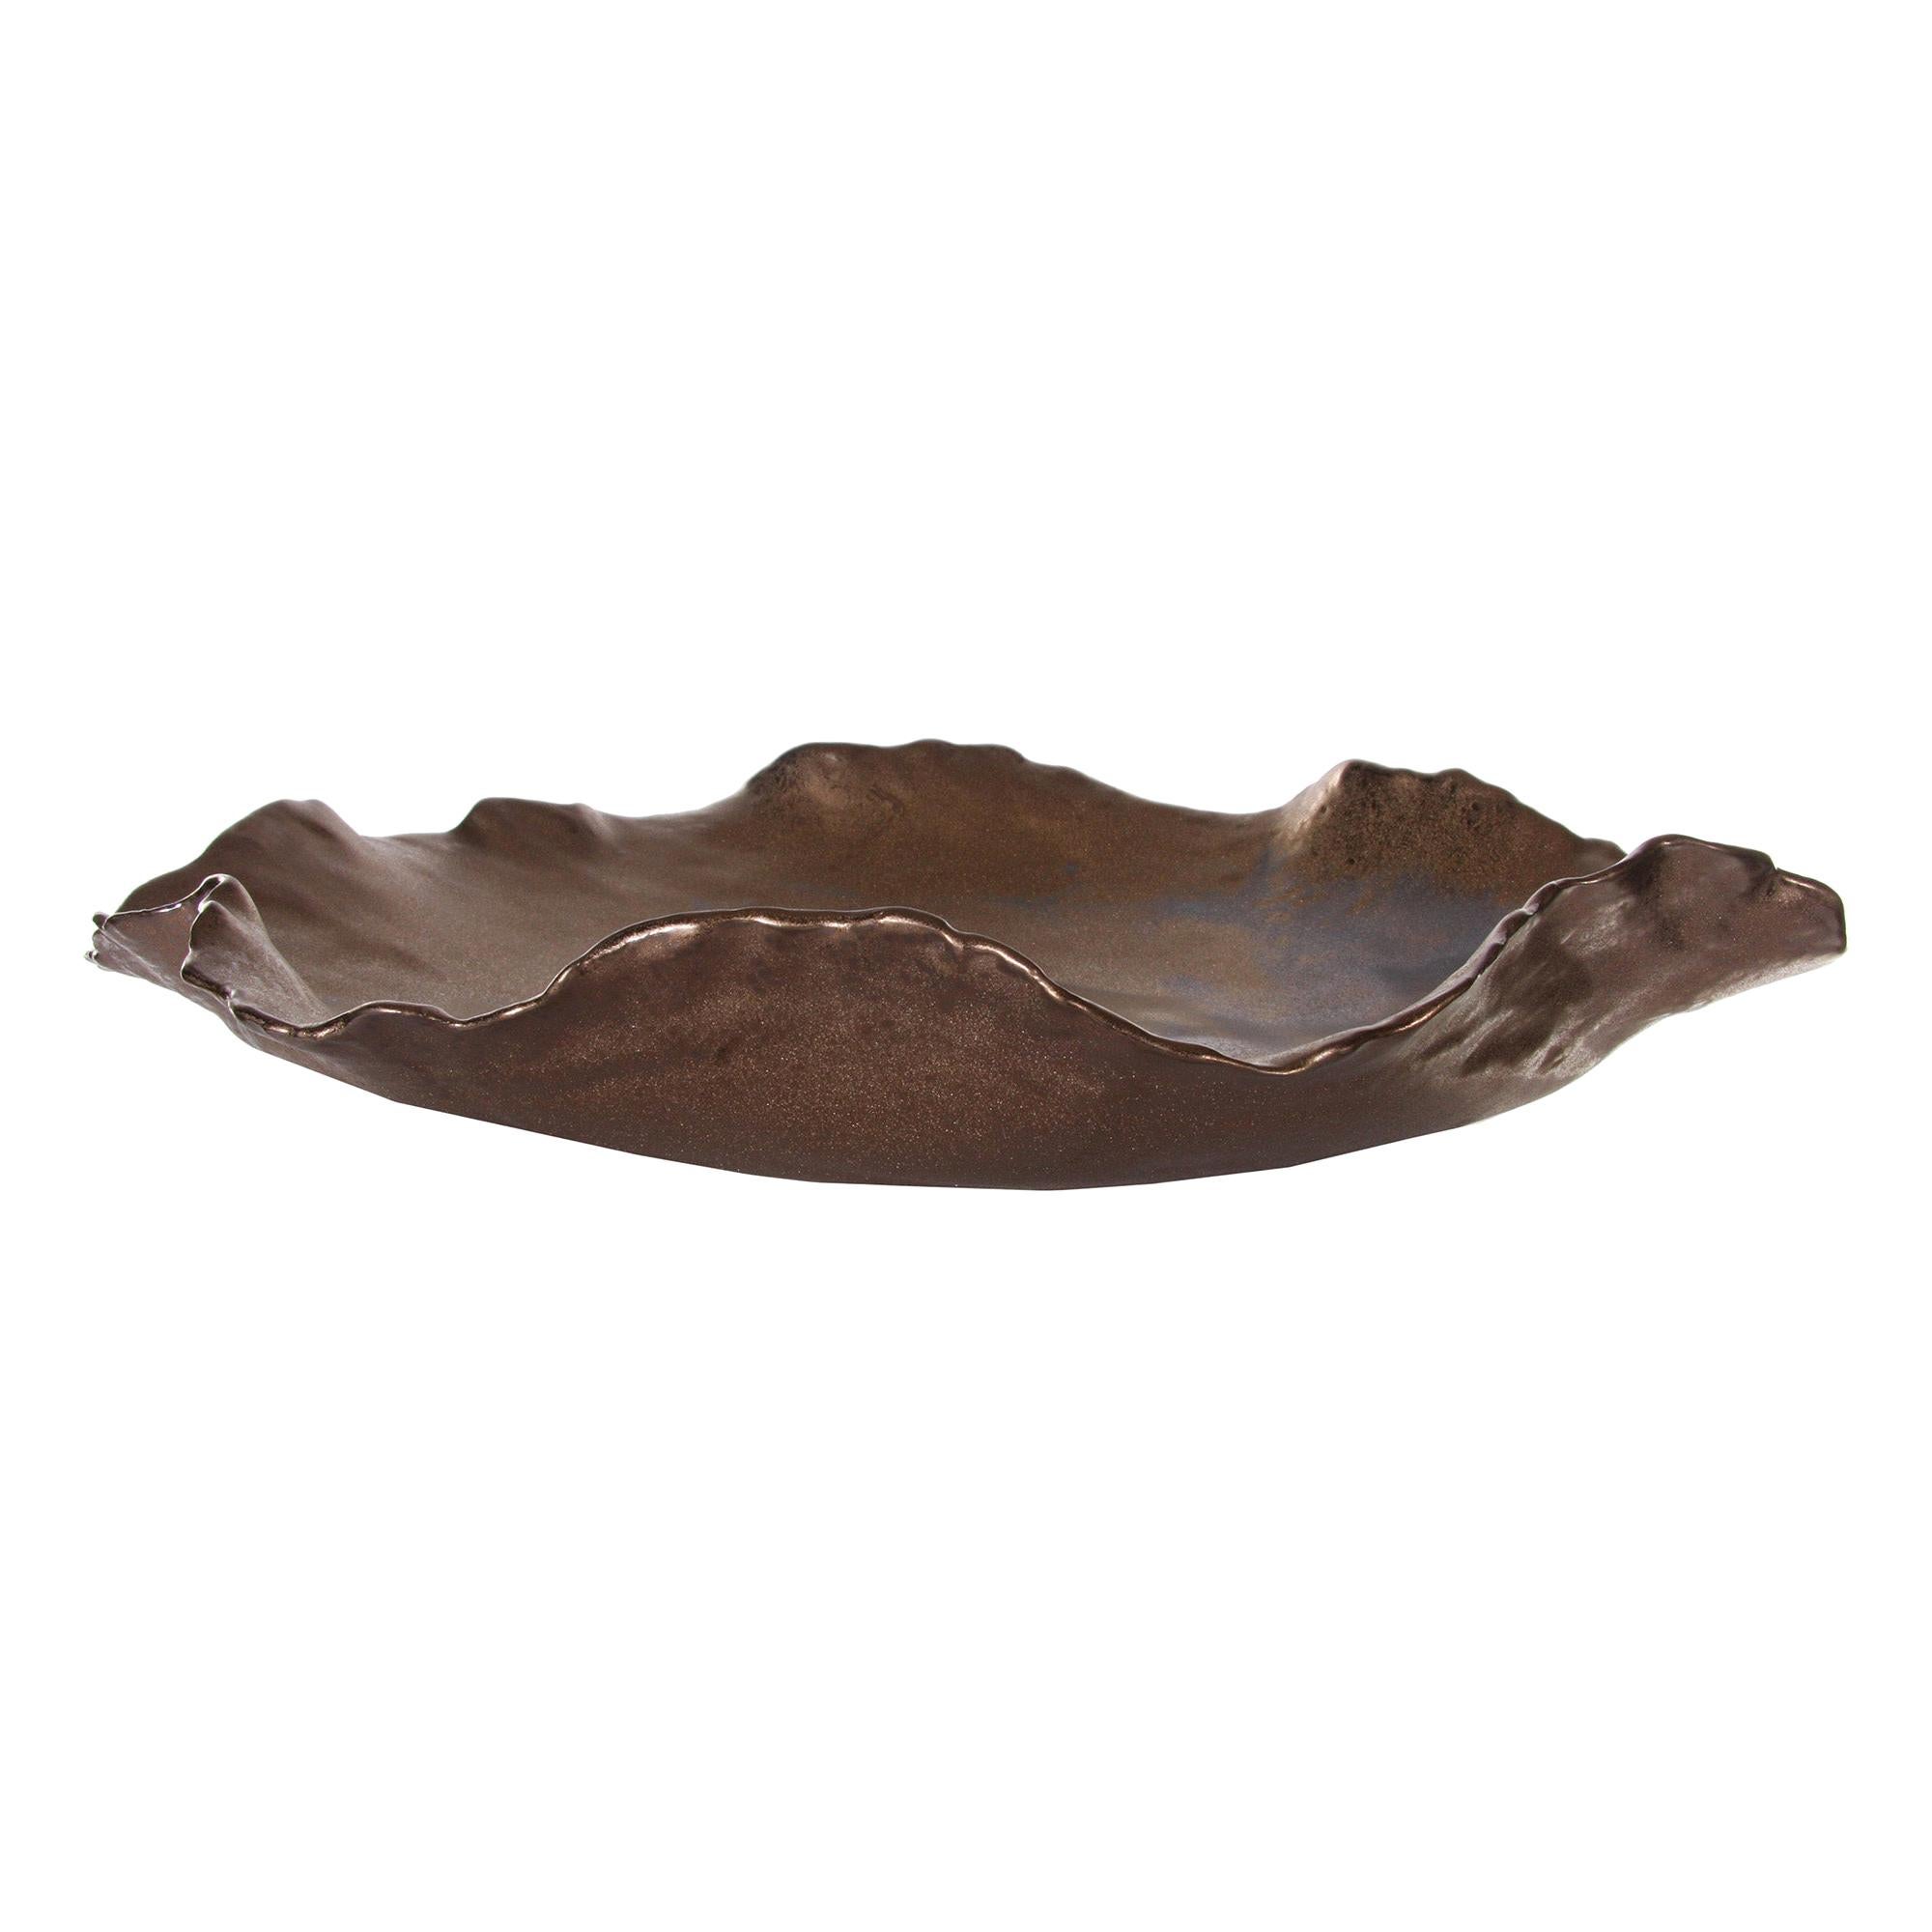 Rowan Bowl in Copper Ceramic by CuratedKravet